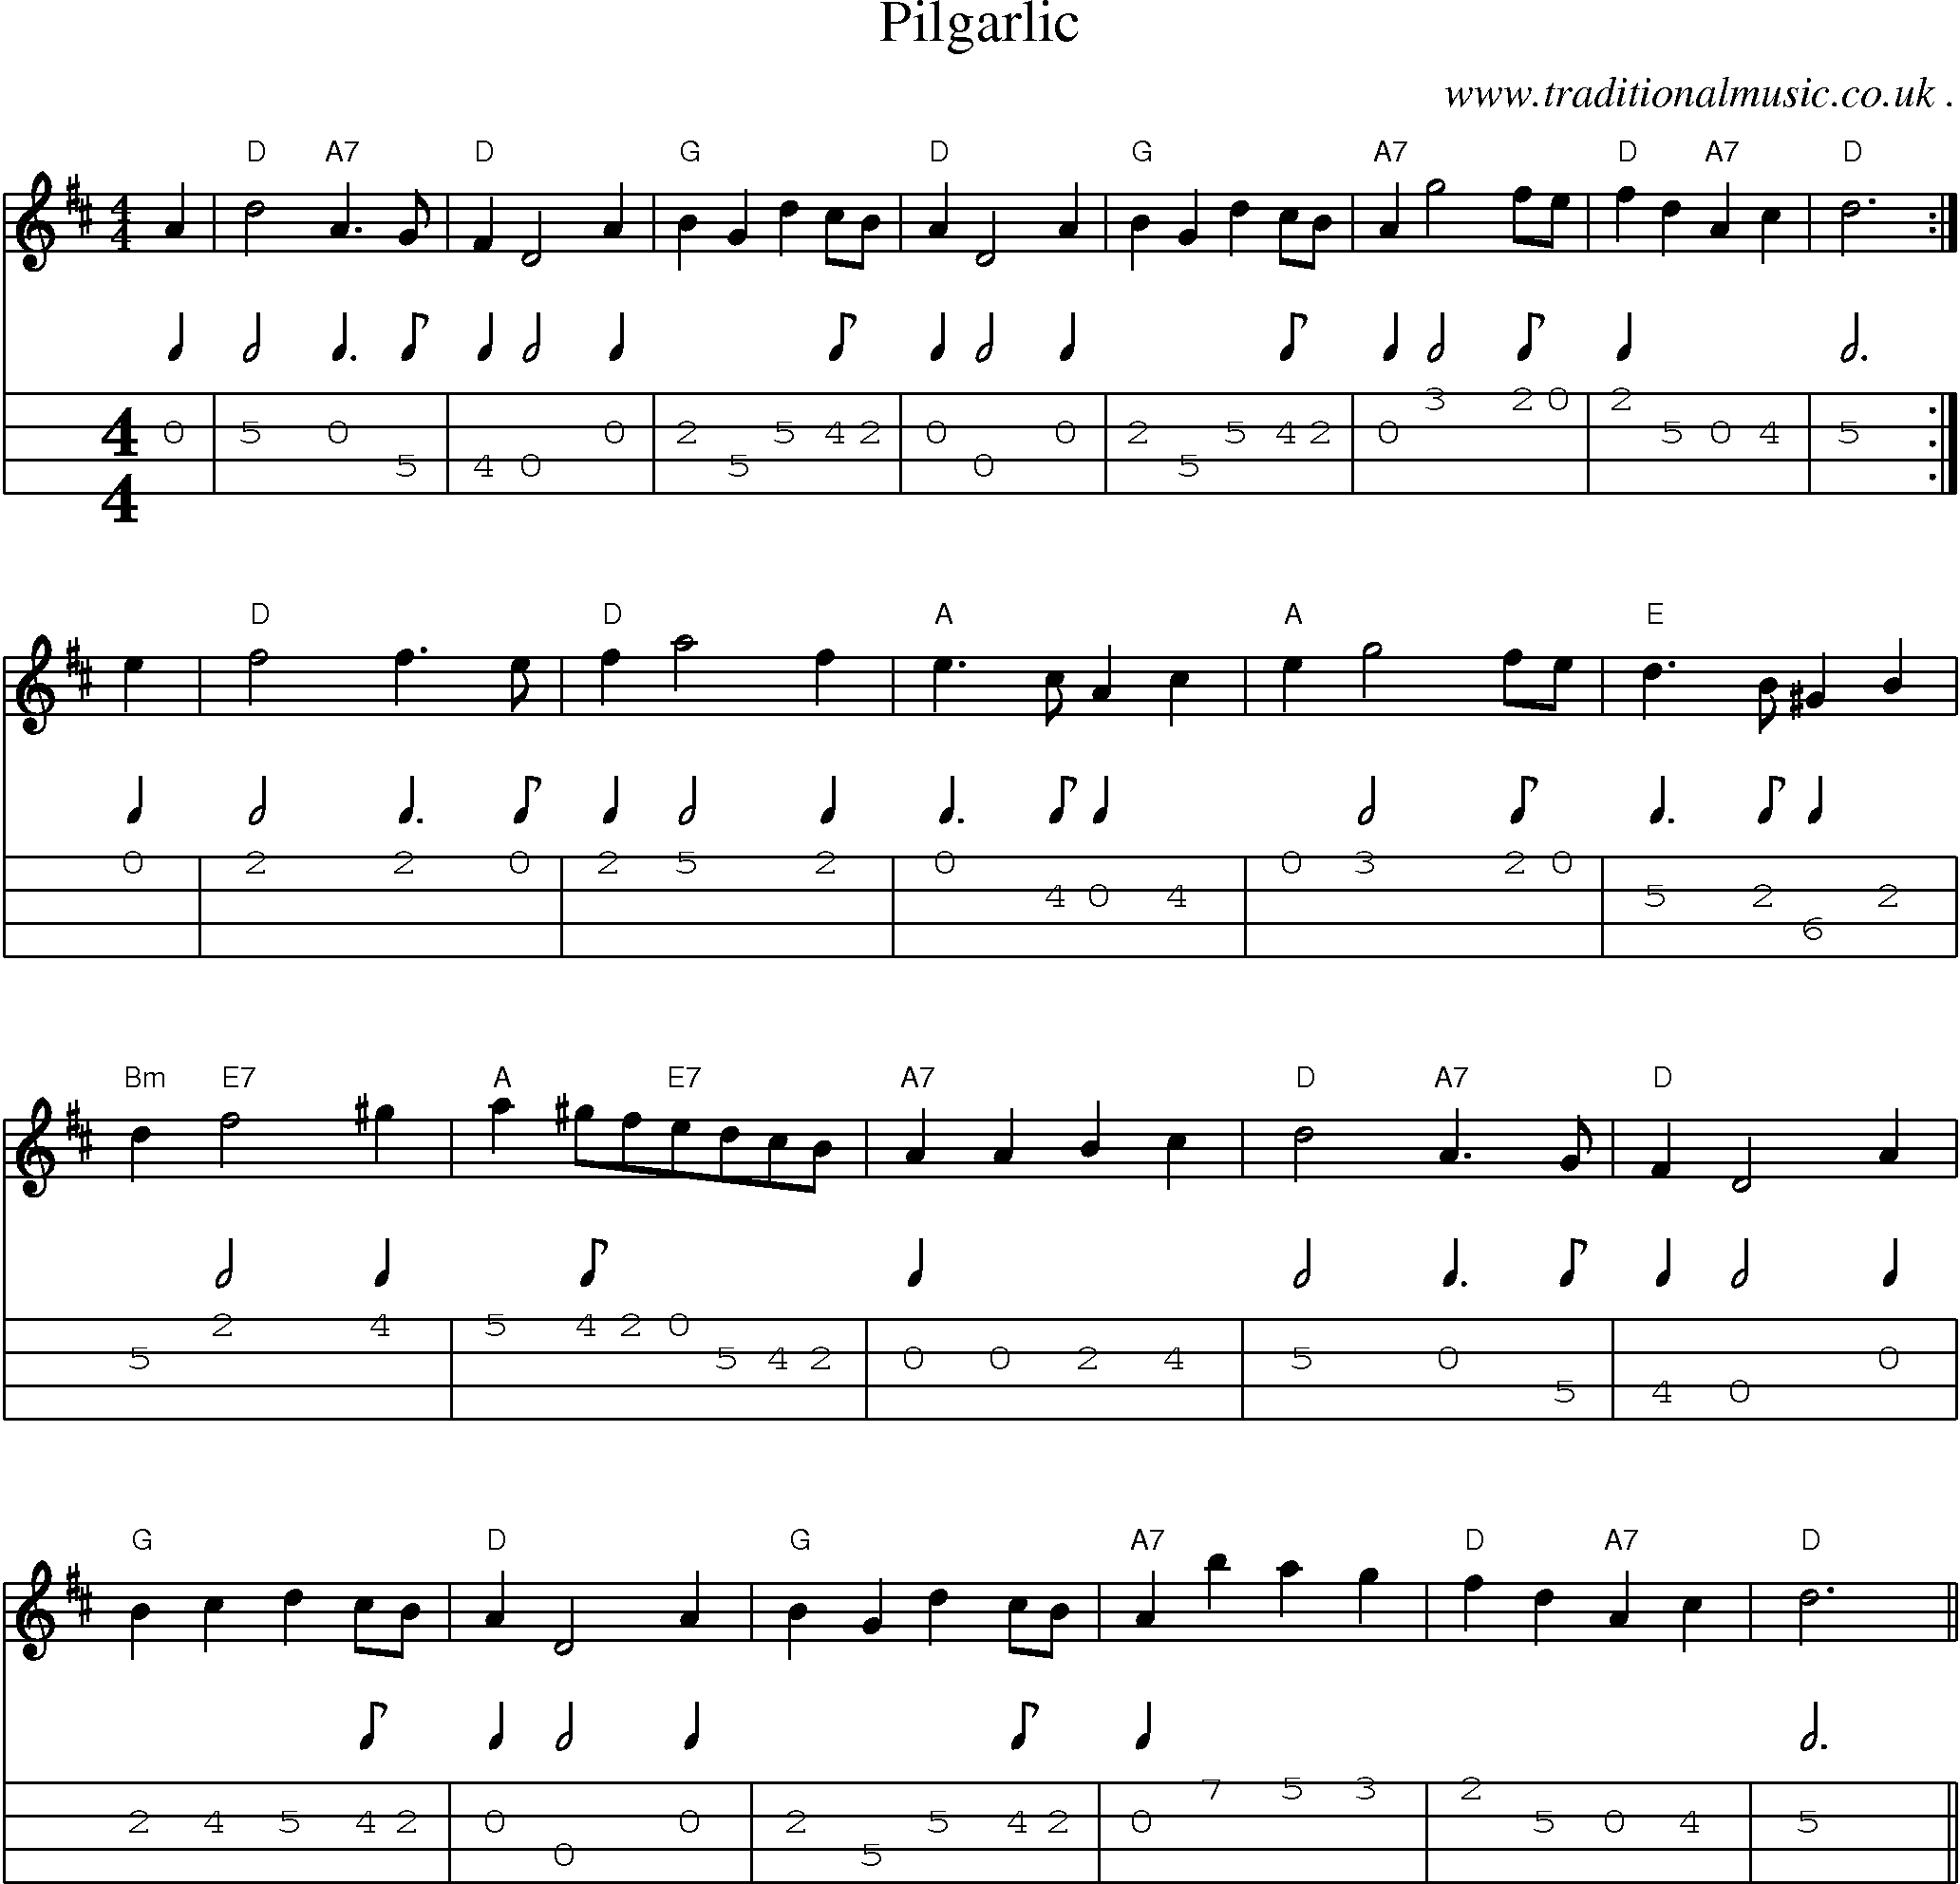 Sheet-Music and Mandolin Tabs for Pilgarlic